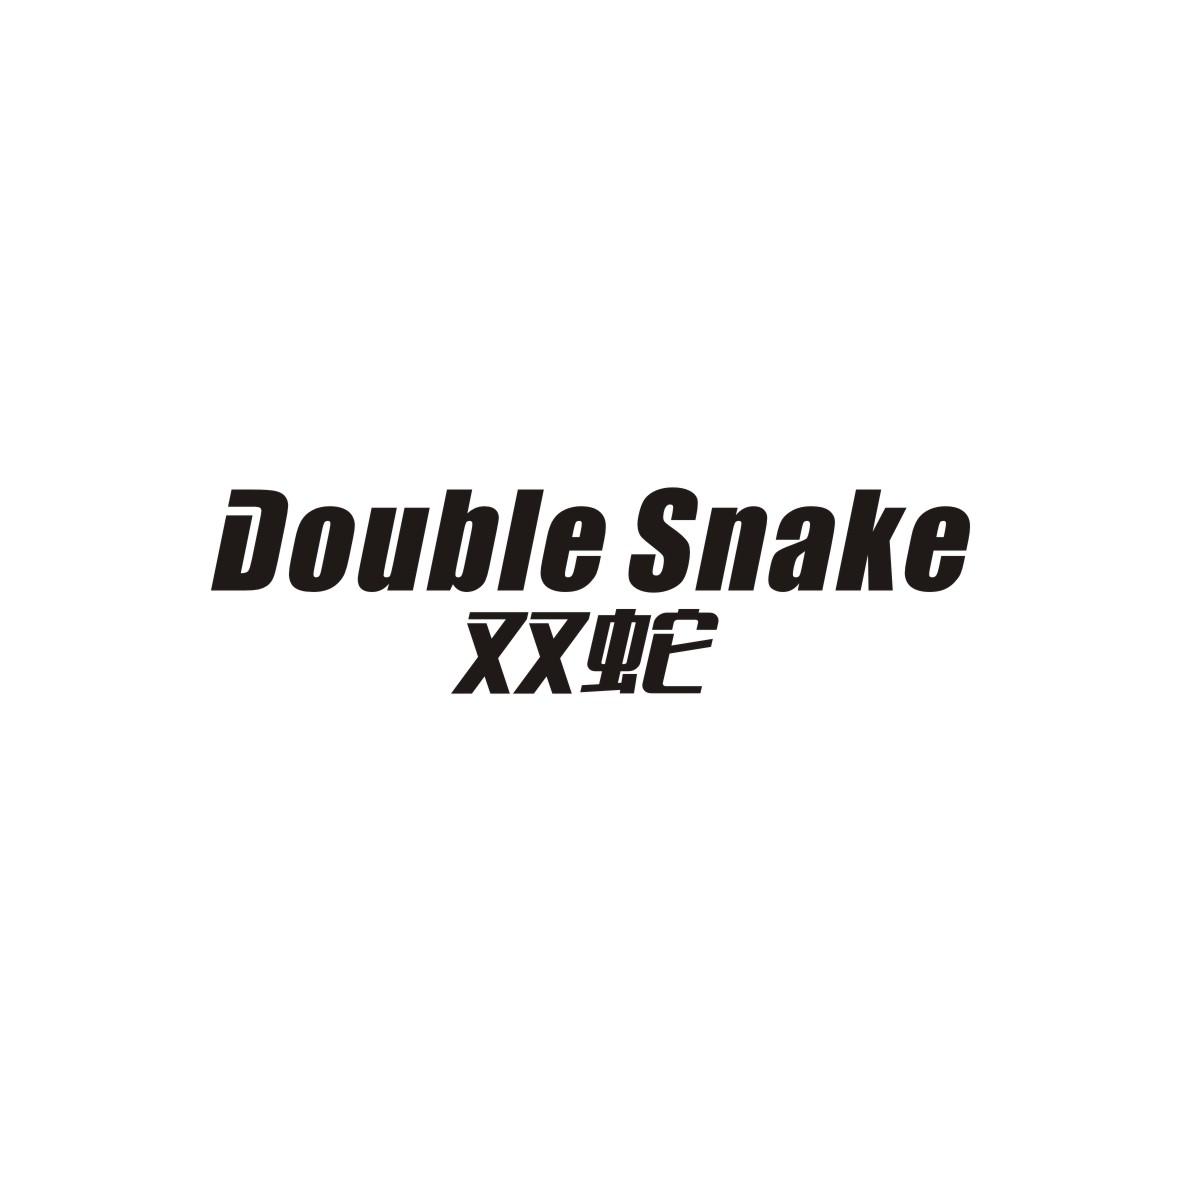 双蛇
Double Snake